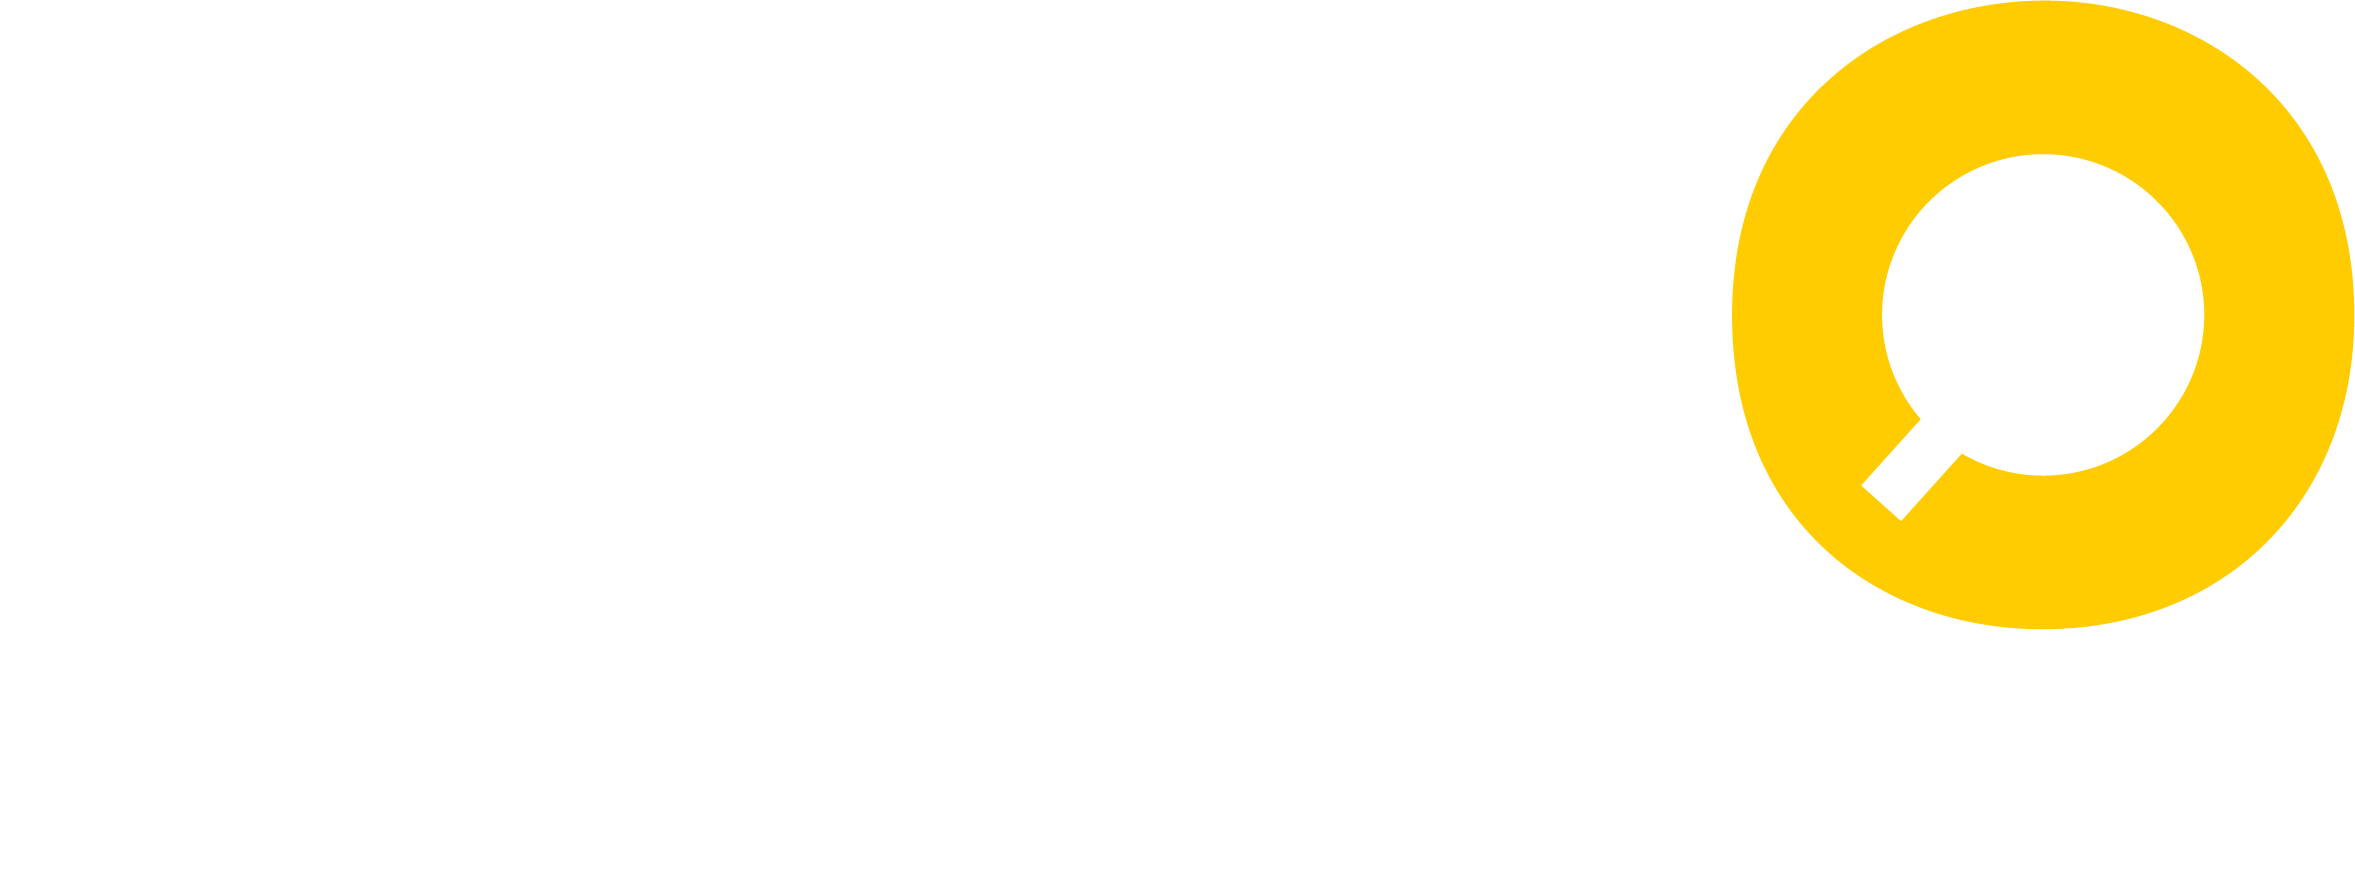 european digital media observatory